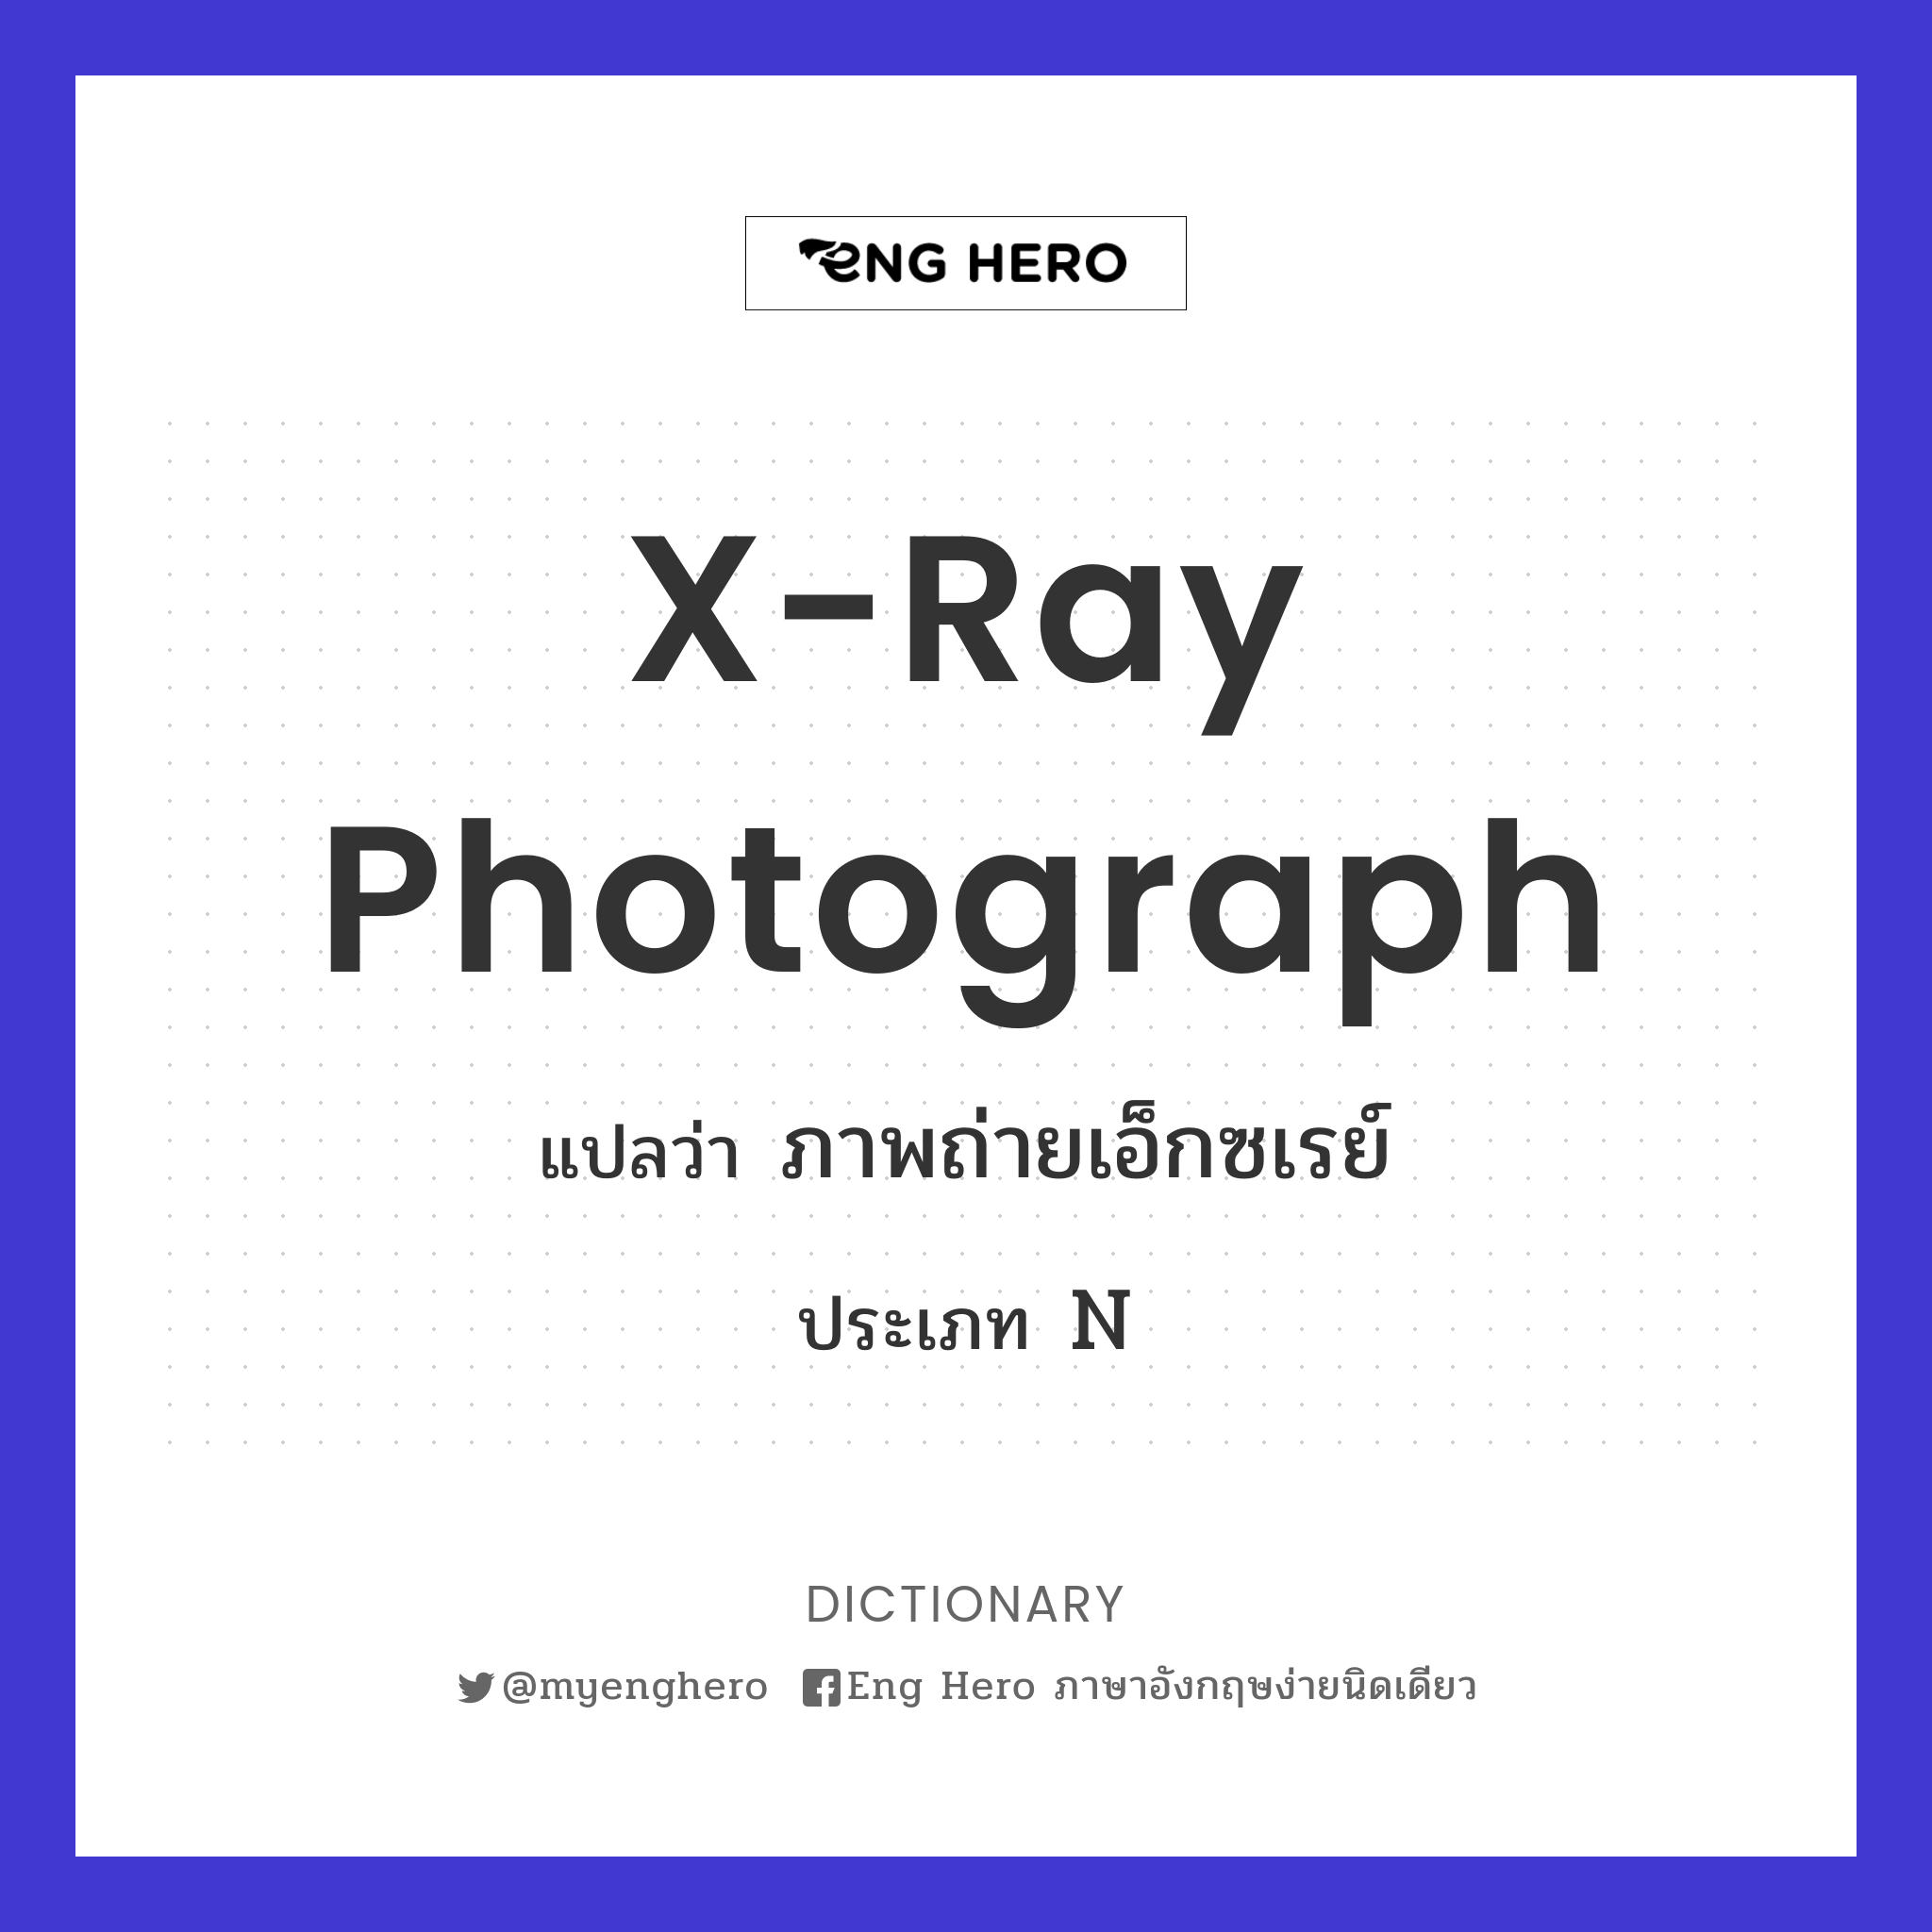 X-ray Photograph